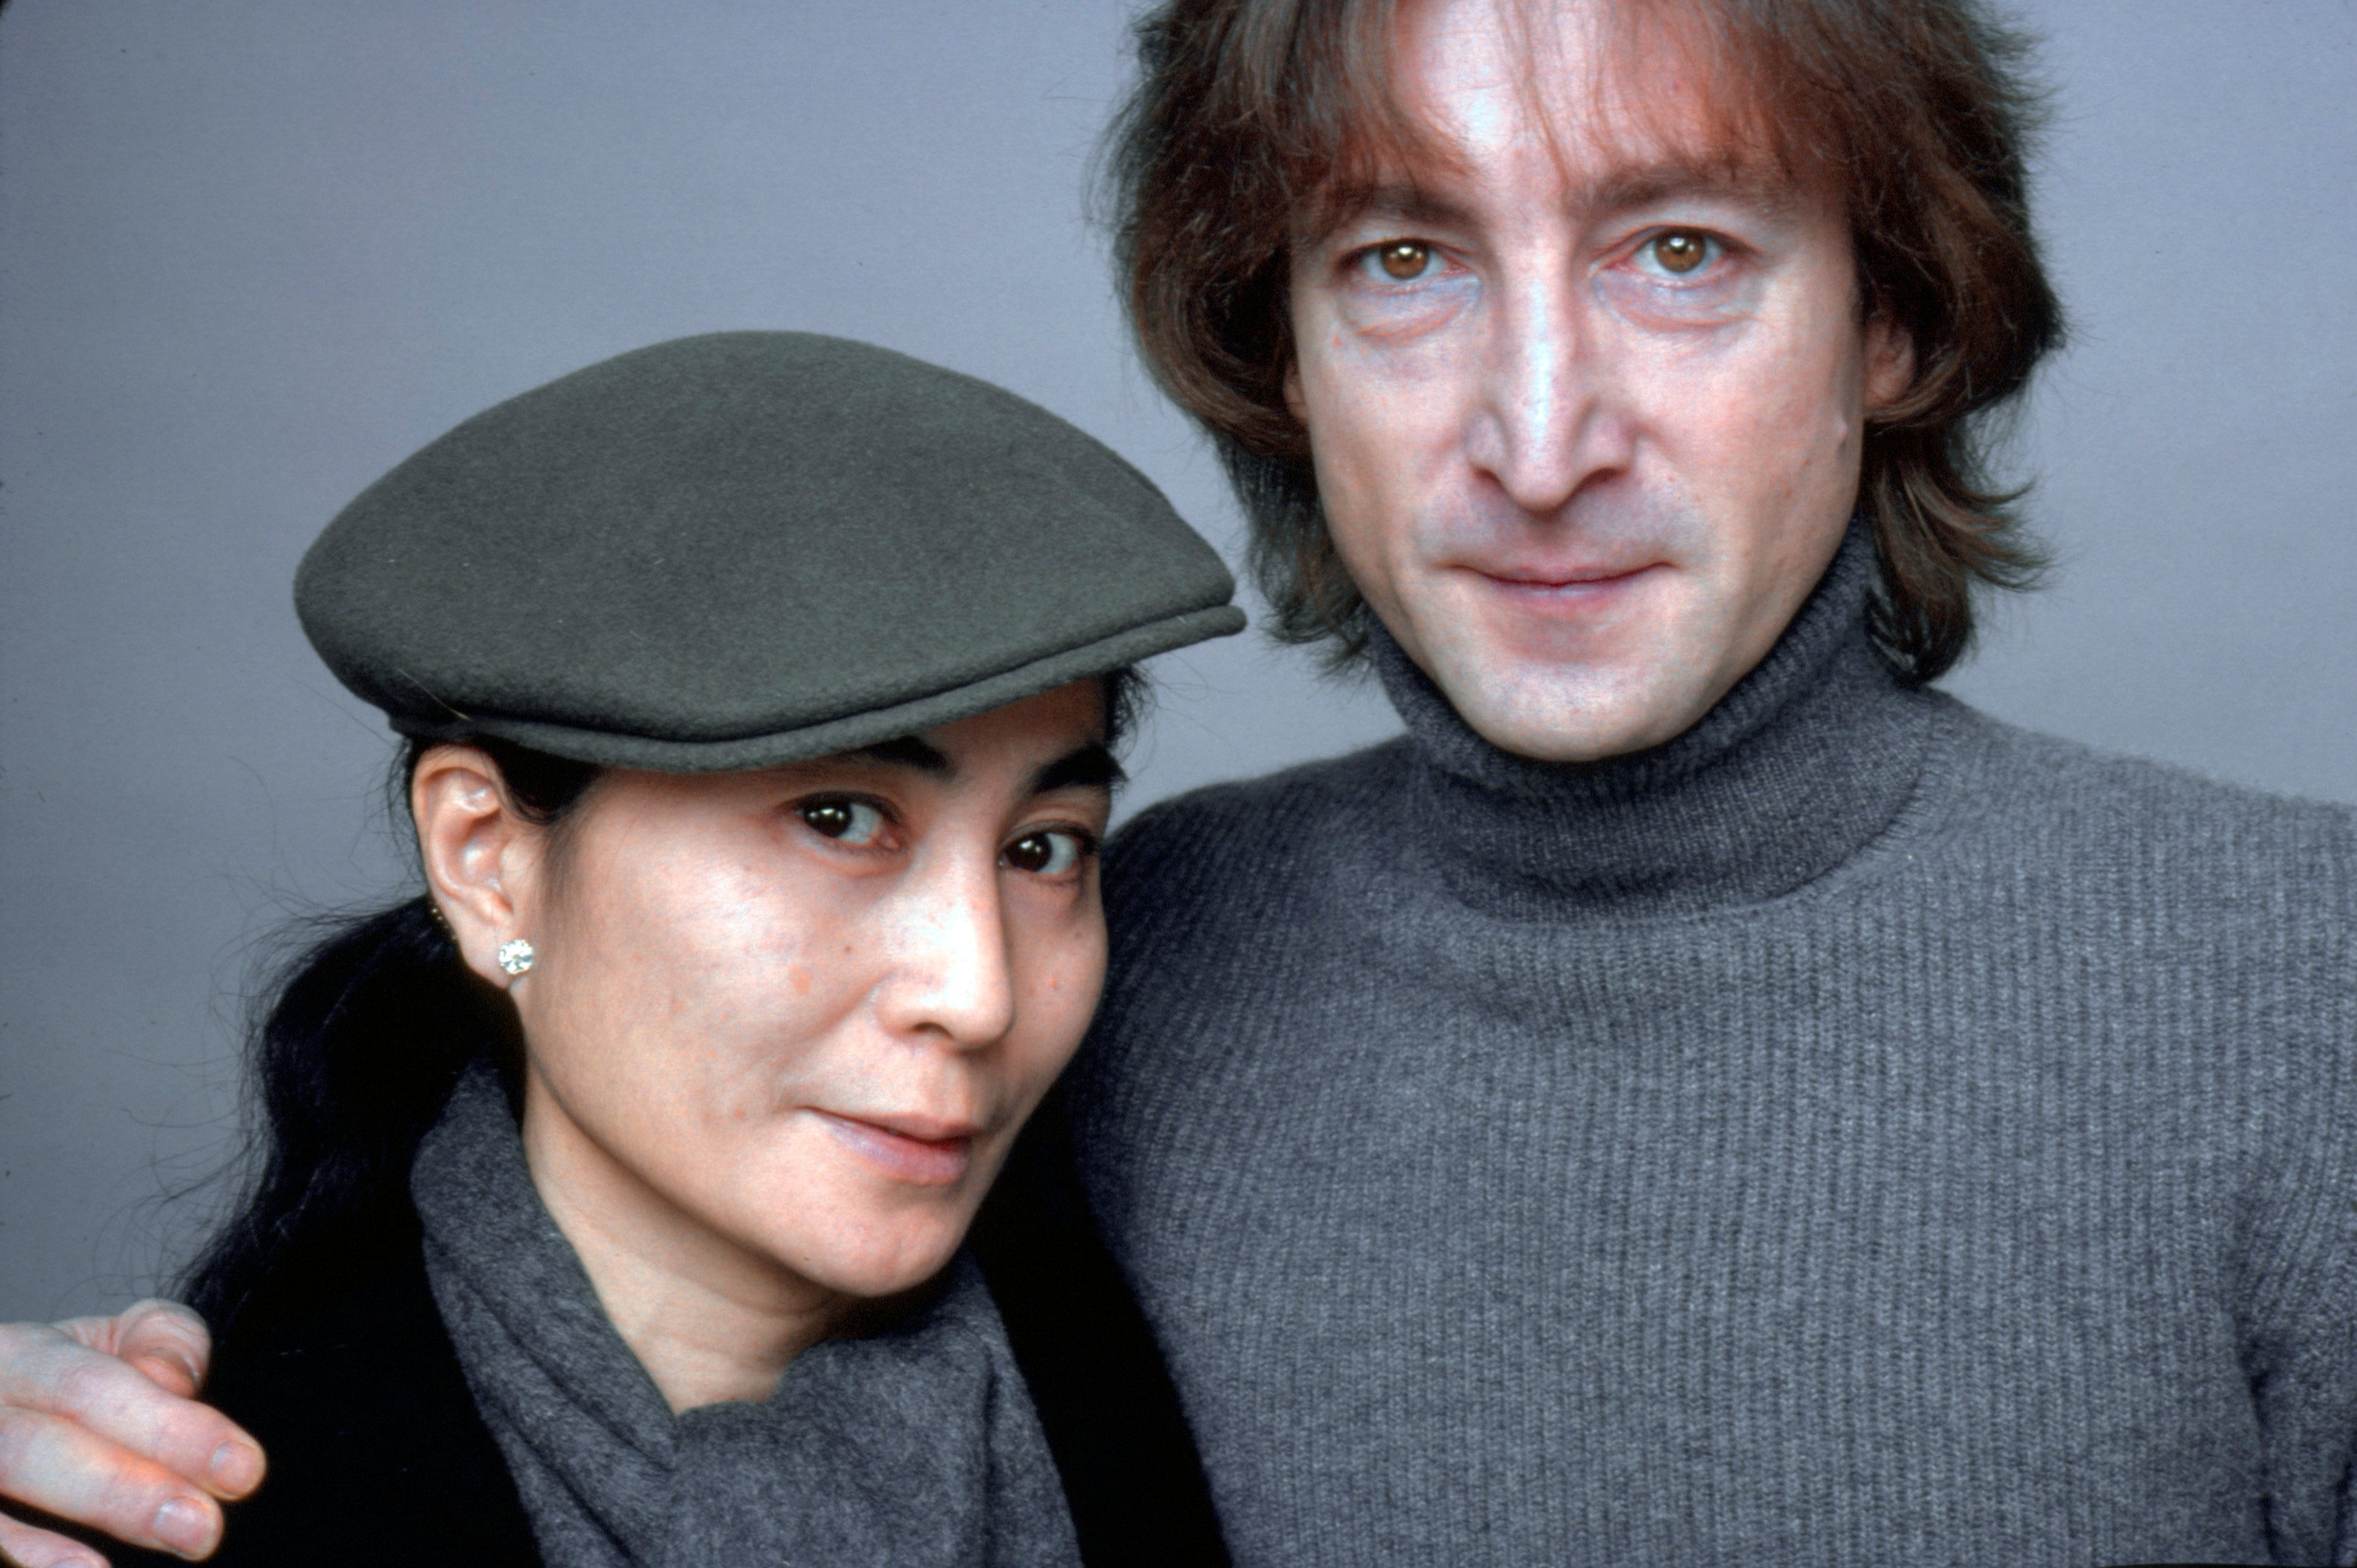 Yoko Ono and John Lennon wearing gray